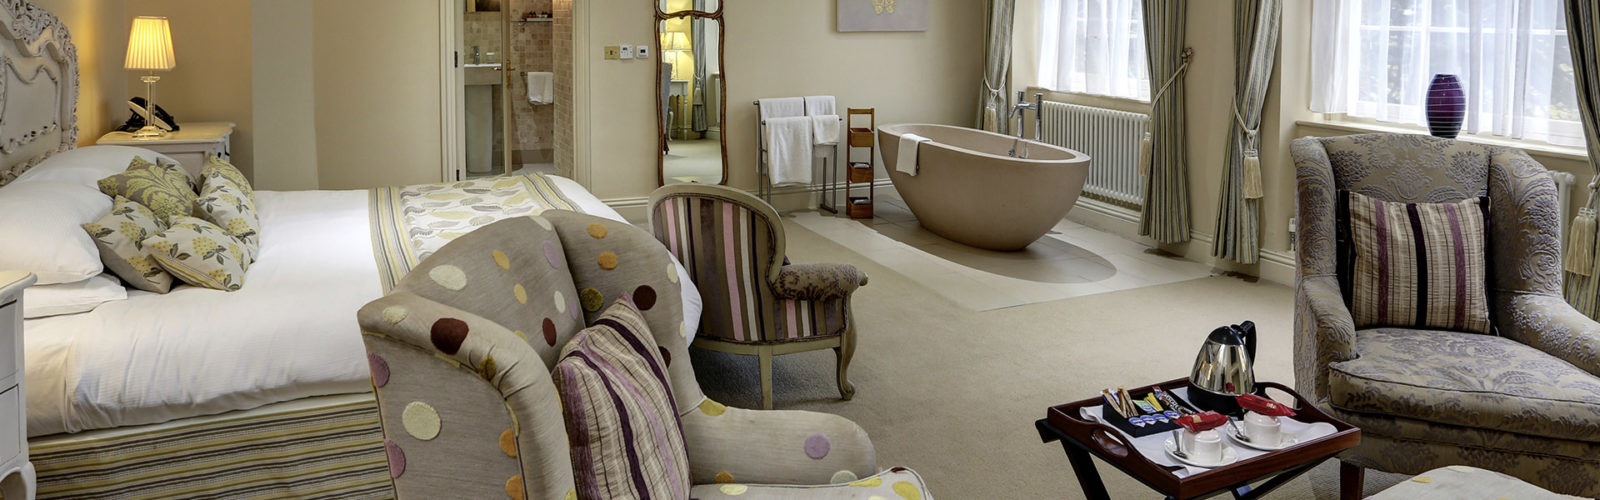 Luxury bedrooms at Mosborough Hall Hotel Vine Hotel Management